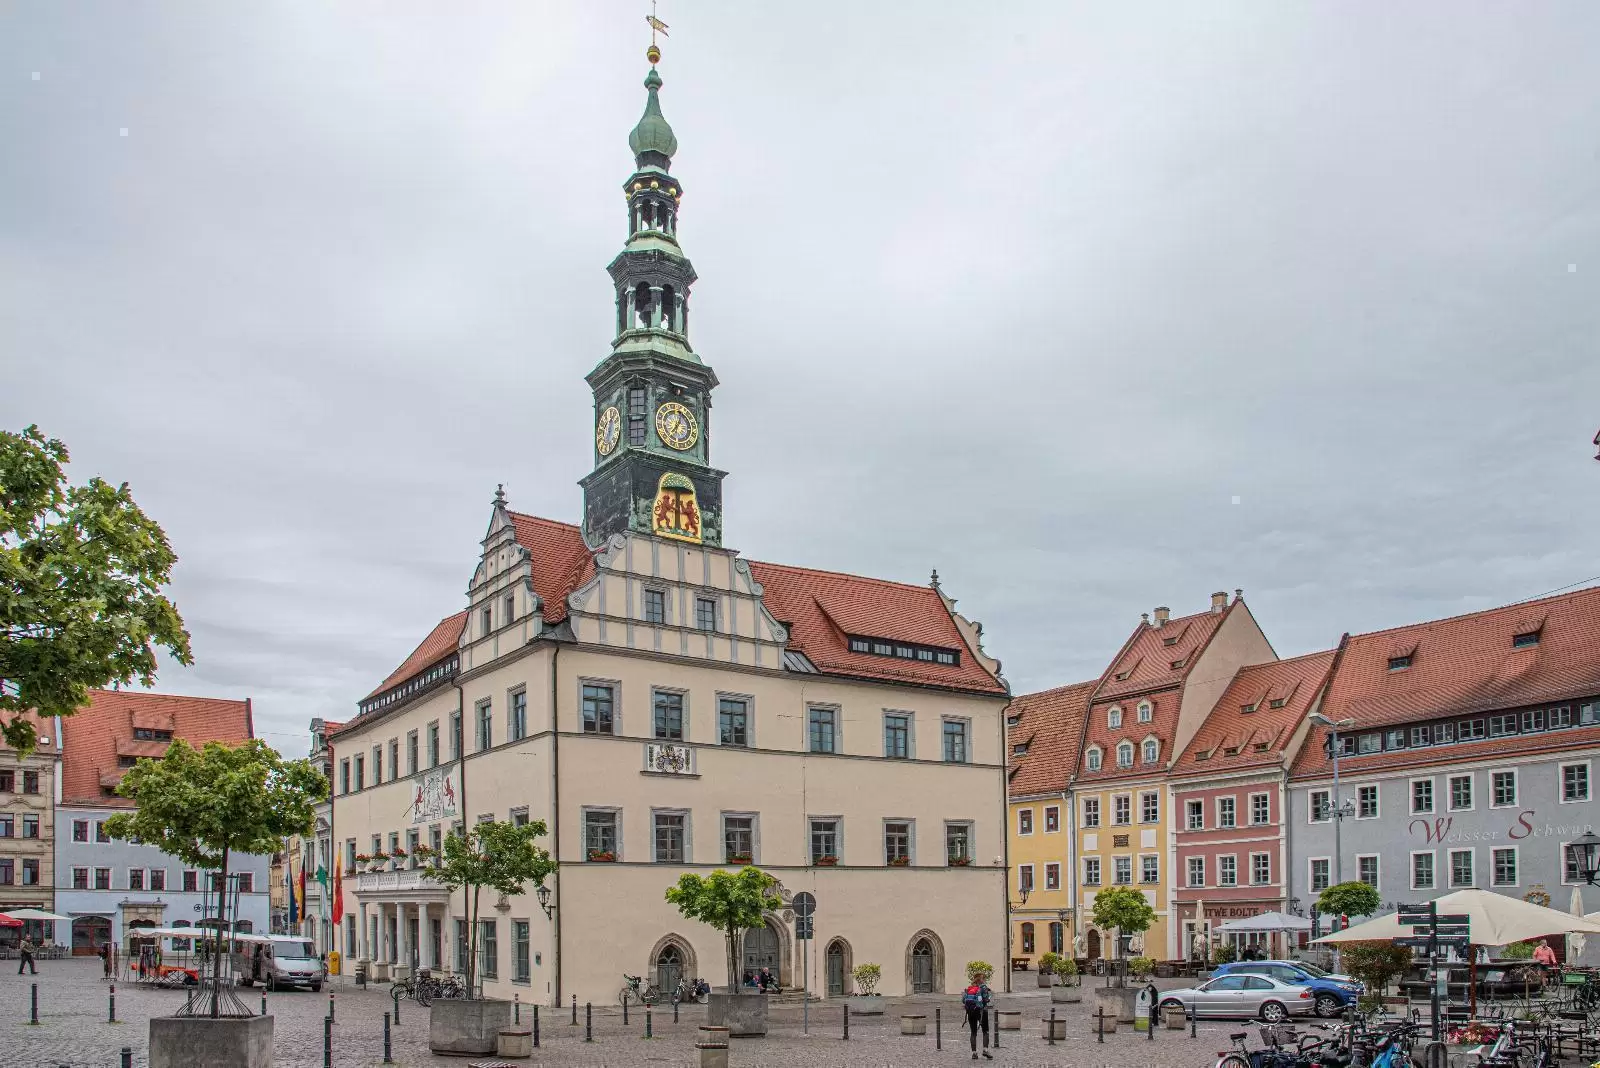 Pirna Town Hall